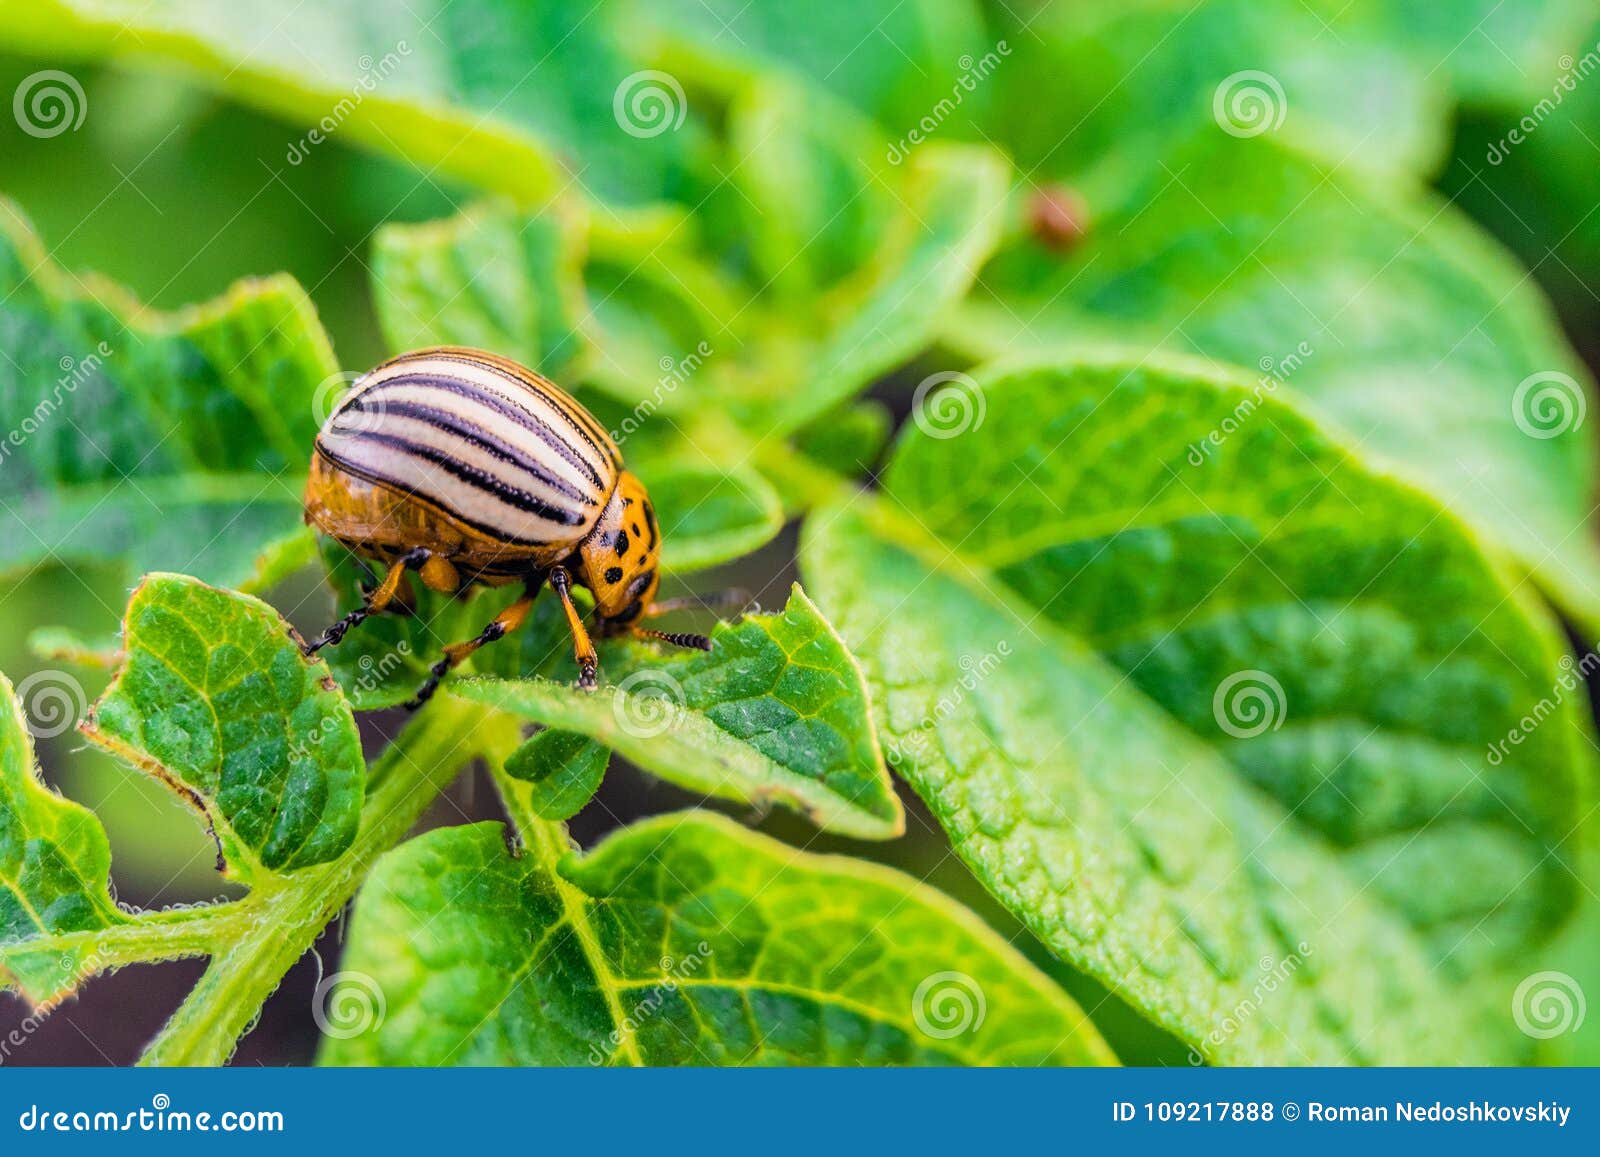 Colorado Beetle Eats Green Potato Leaves Garden Insect Pest